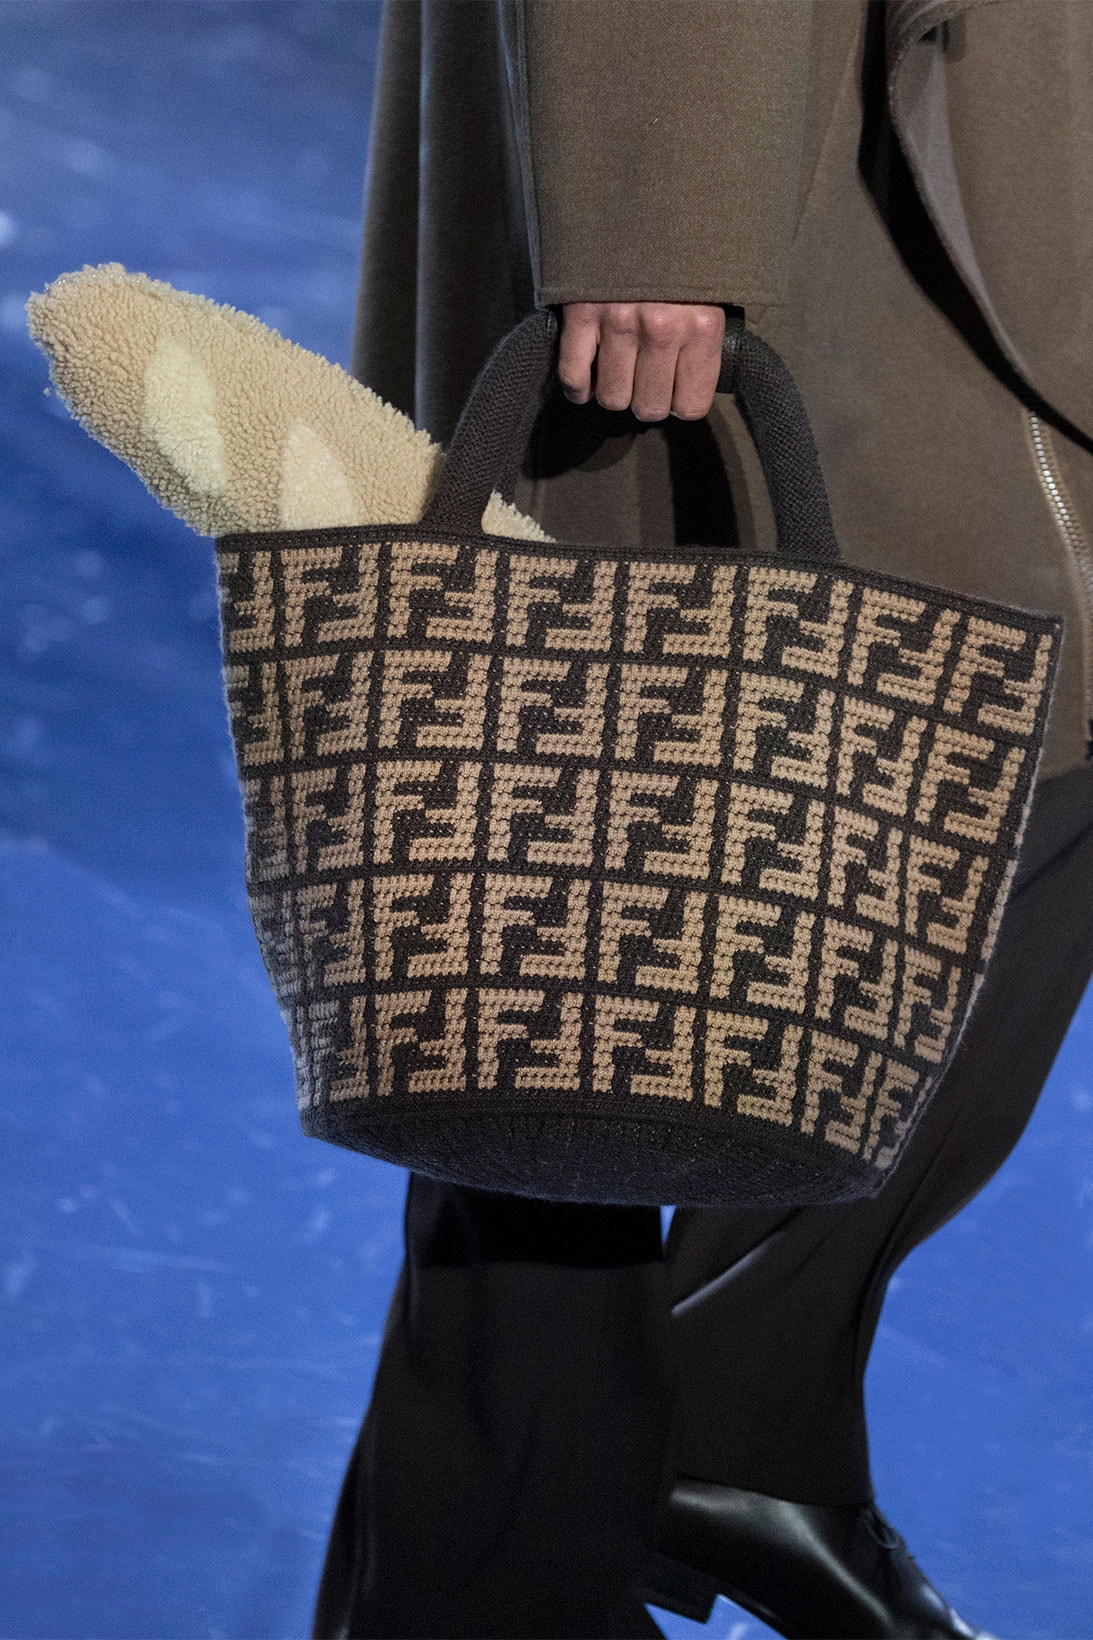 Fendi Fall Winter Baguette Handbags Accessories Milan Fashion Week Mens Images